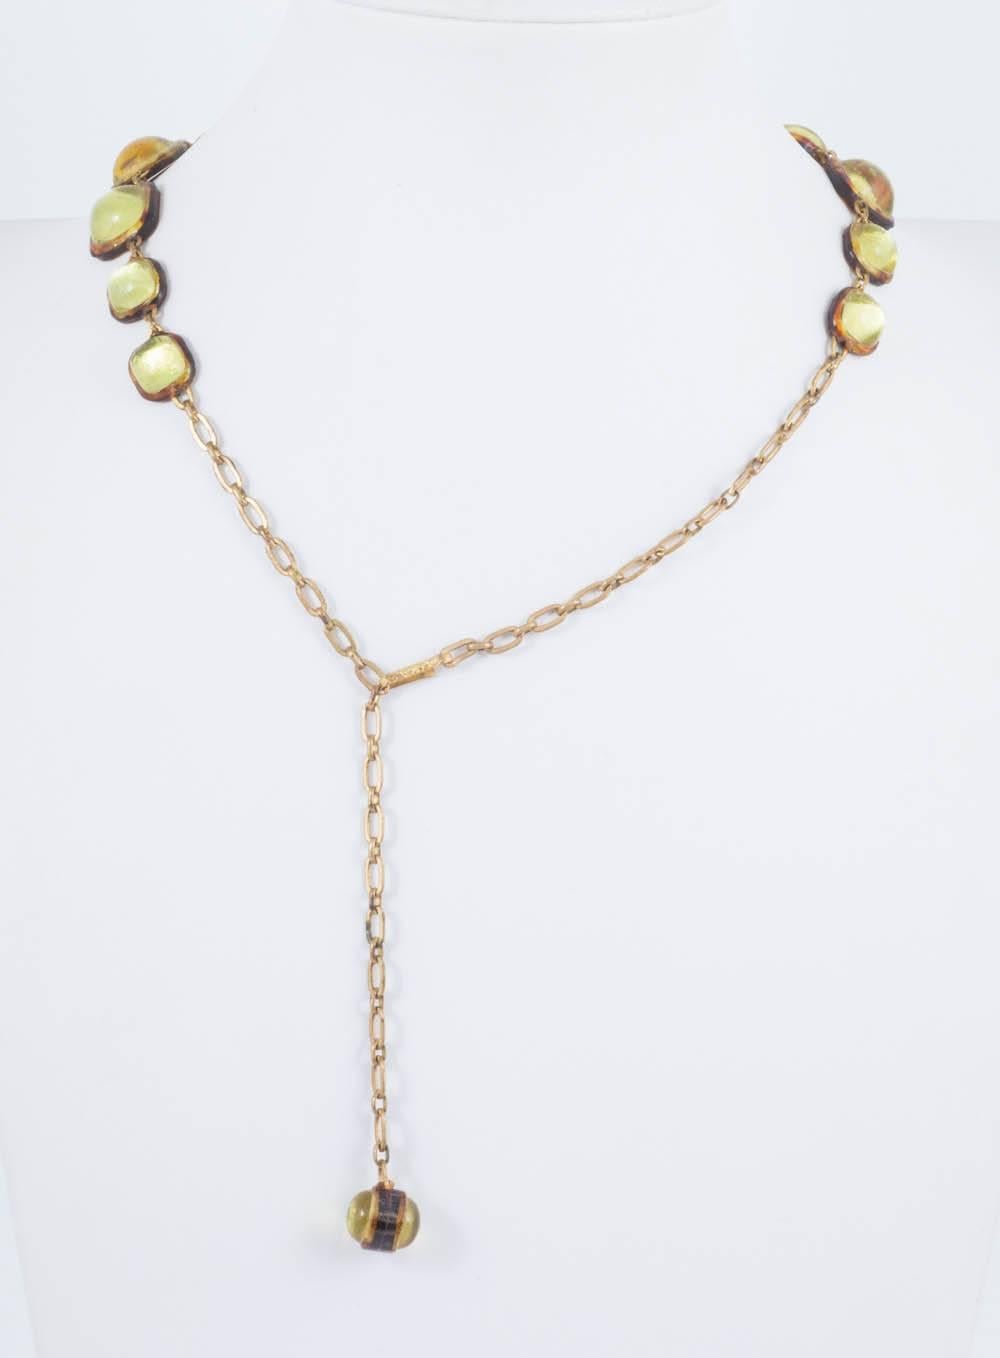 Luminous citrine resin necklace, France, 1960s 2